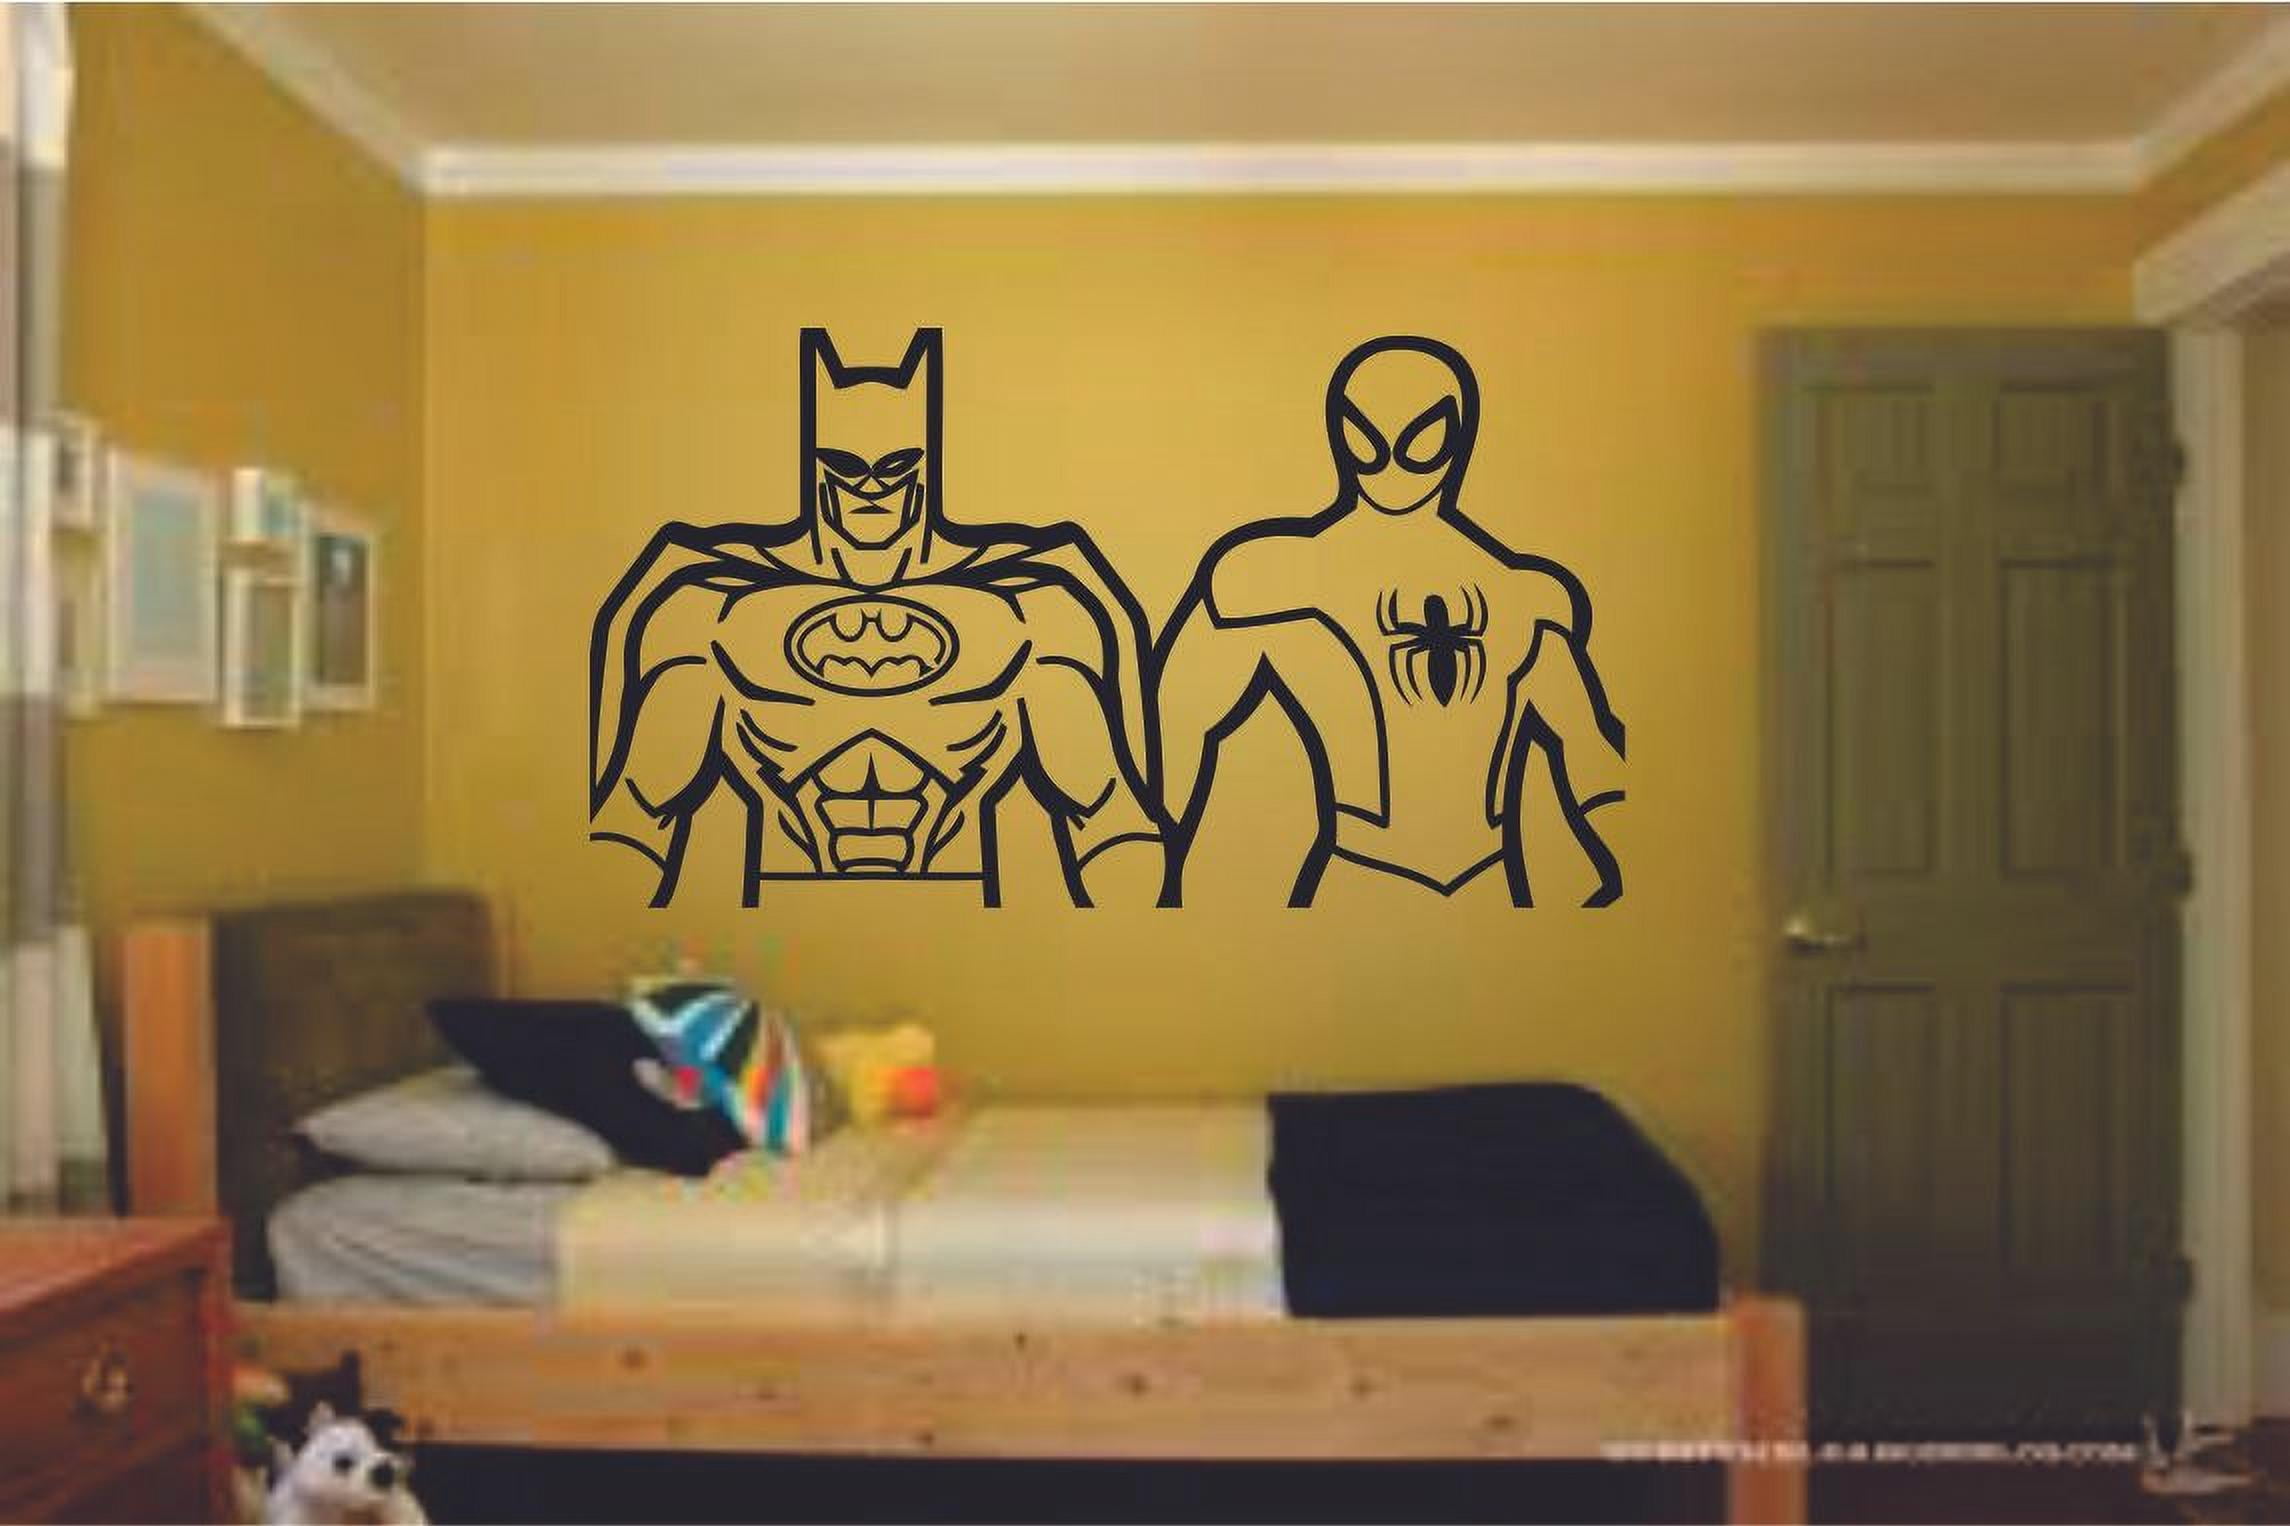 3D Batman Broken Wall Sticker Super Hero Poster Boys Room Home Decor For Kids 